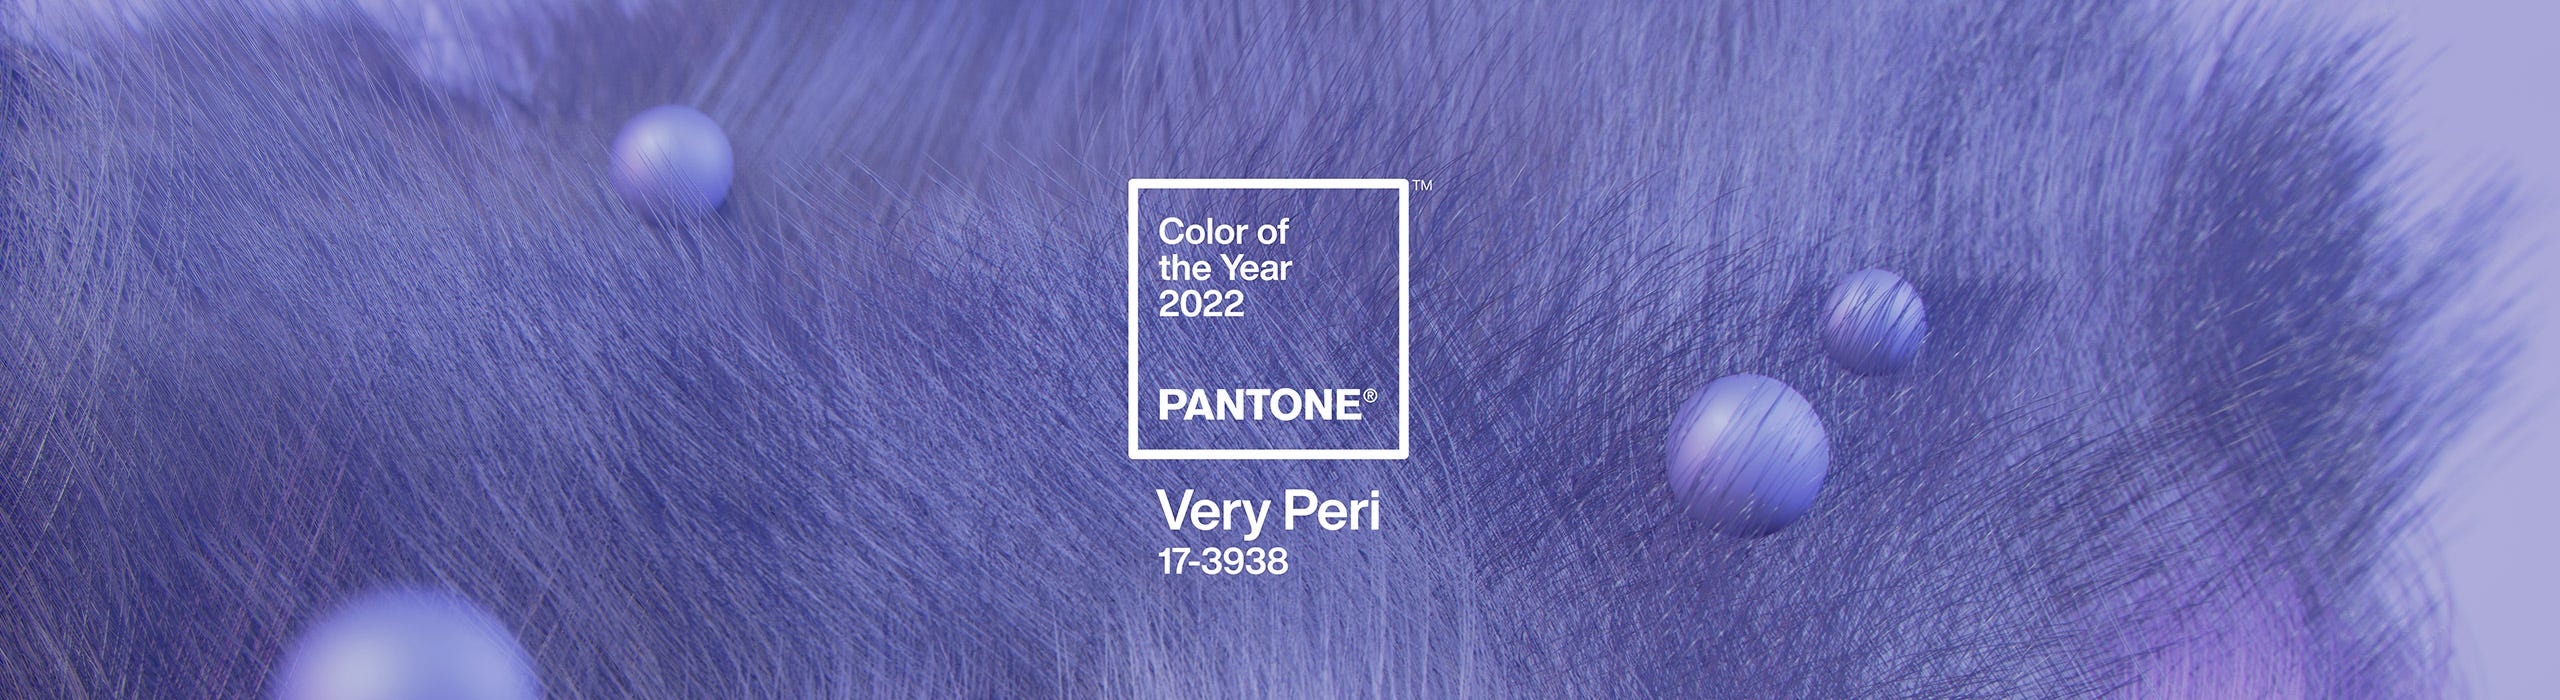 pantone 2022 رنگ آبی بنفش رنگ سال